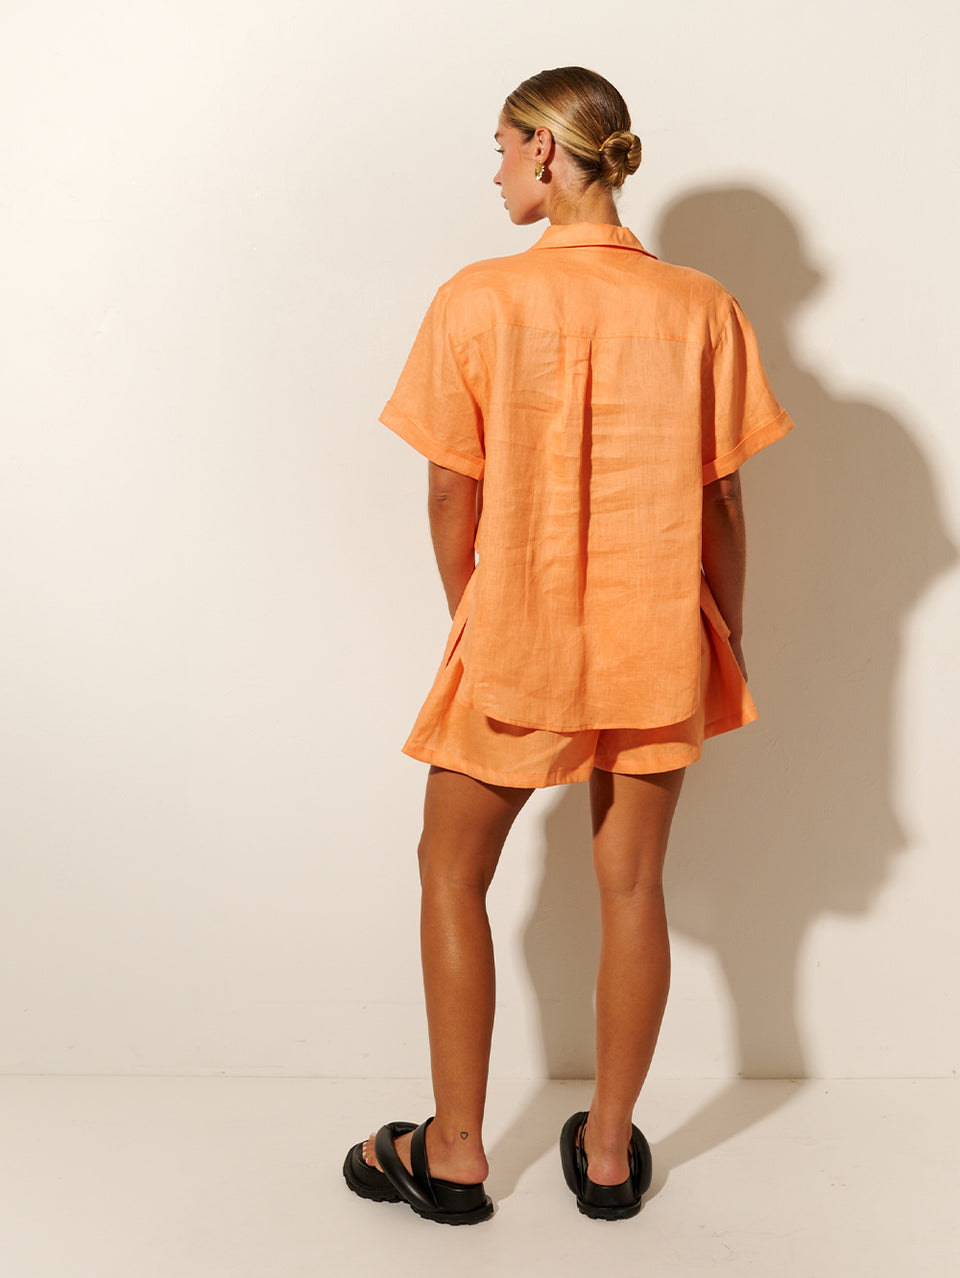 KIVARI Jacana Short | Model wears Orange Shorts Back View